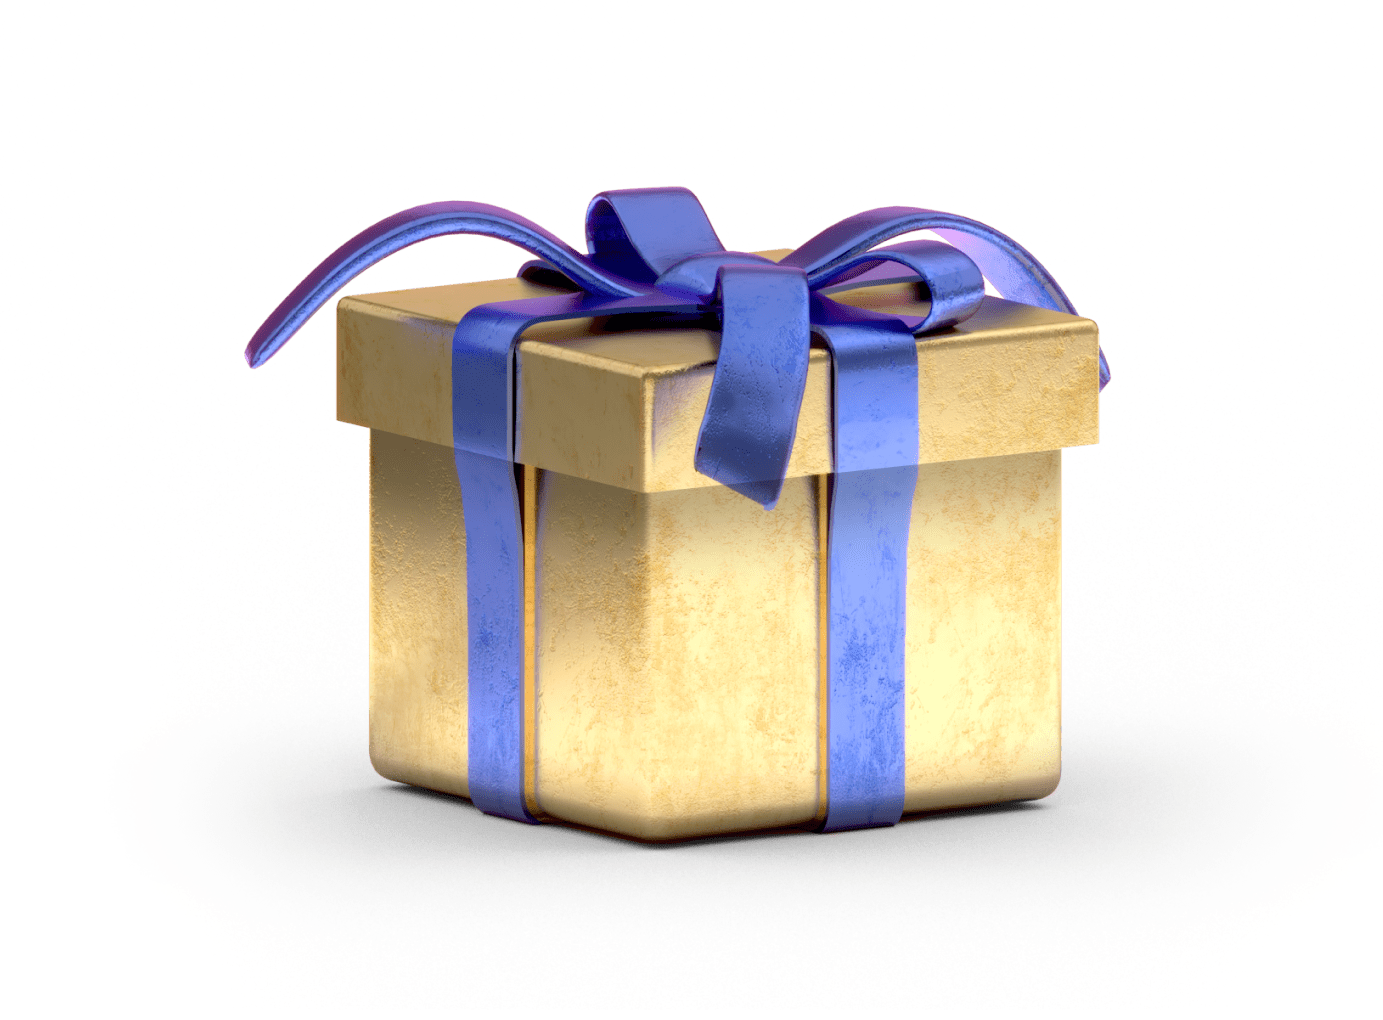 Remitbee gift box